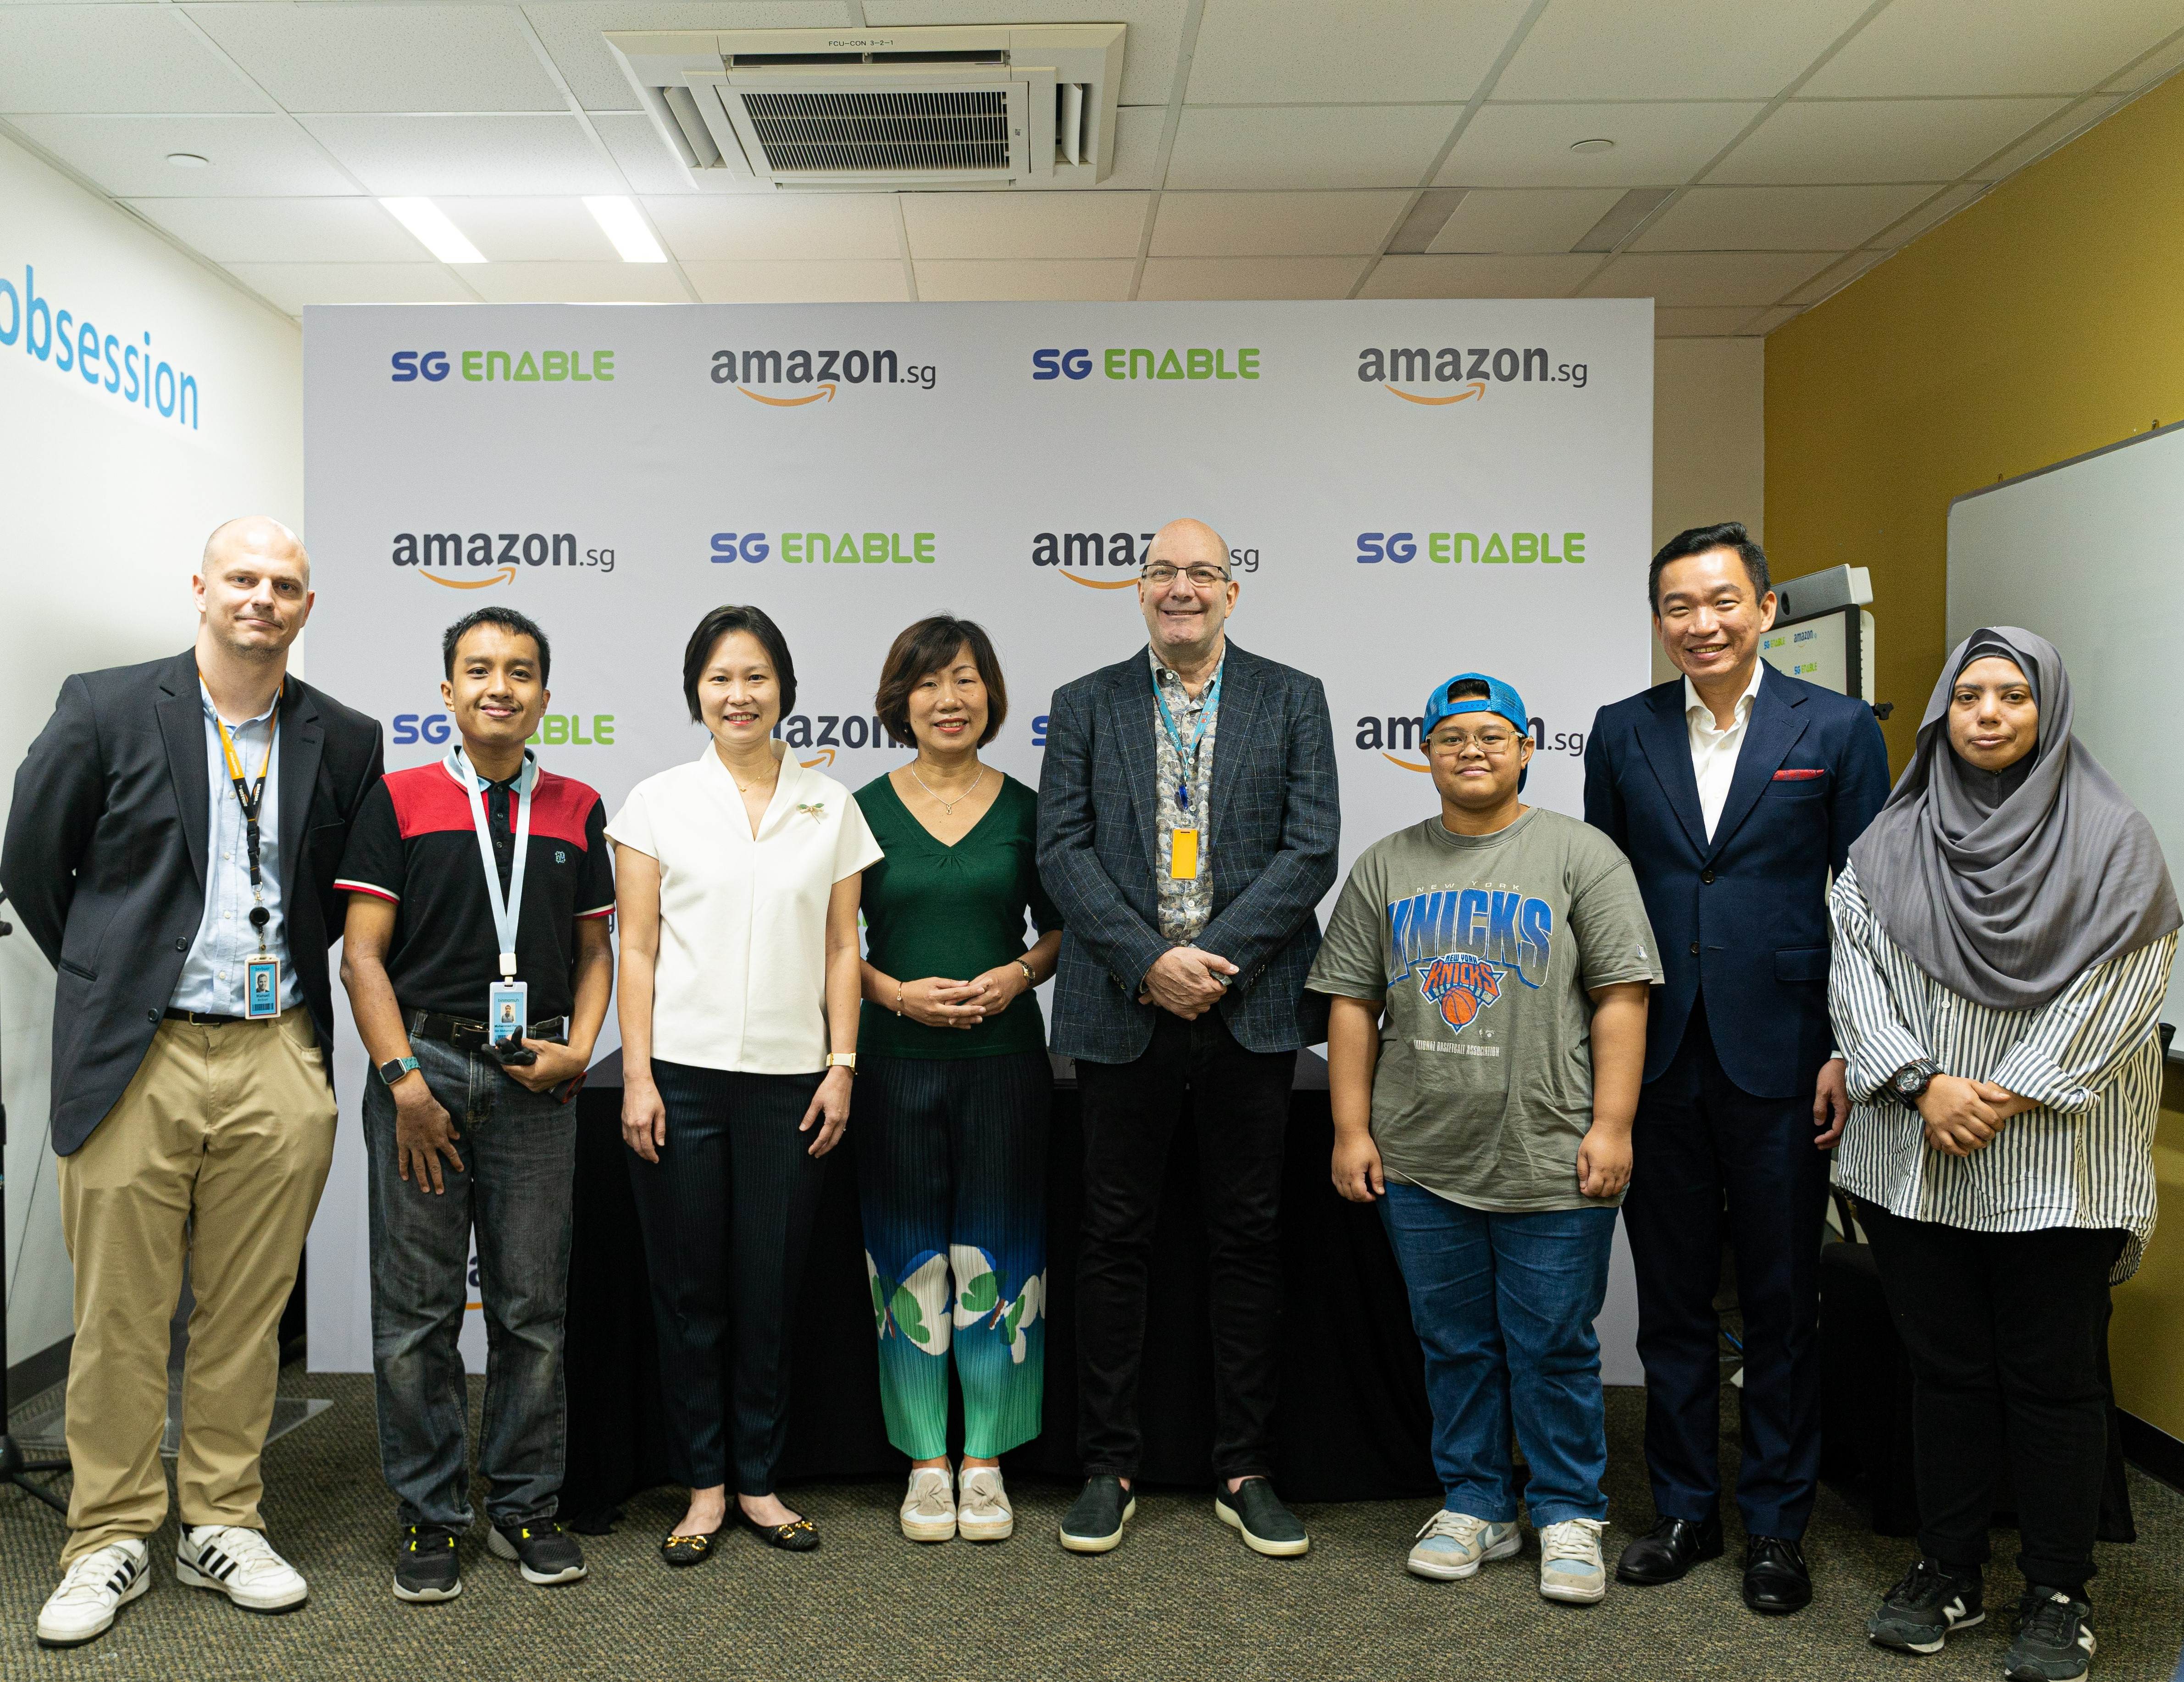  Ms. Ku Geok Boon, Mr. Steve Walter, Mr. Eric Chua and Ms. Gan Siow Huang posing with Amazon's Associates with Disabilities.